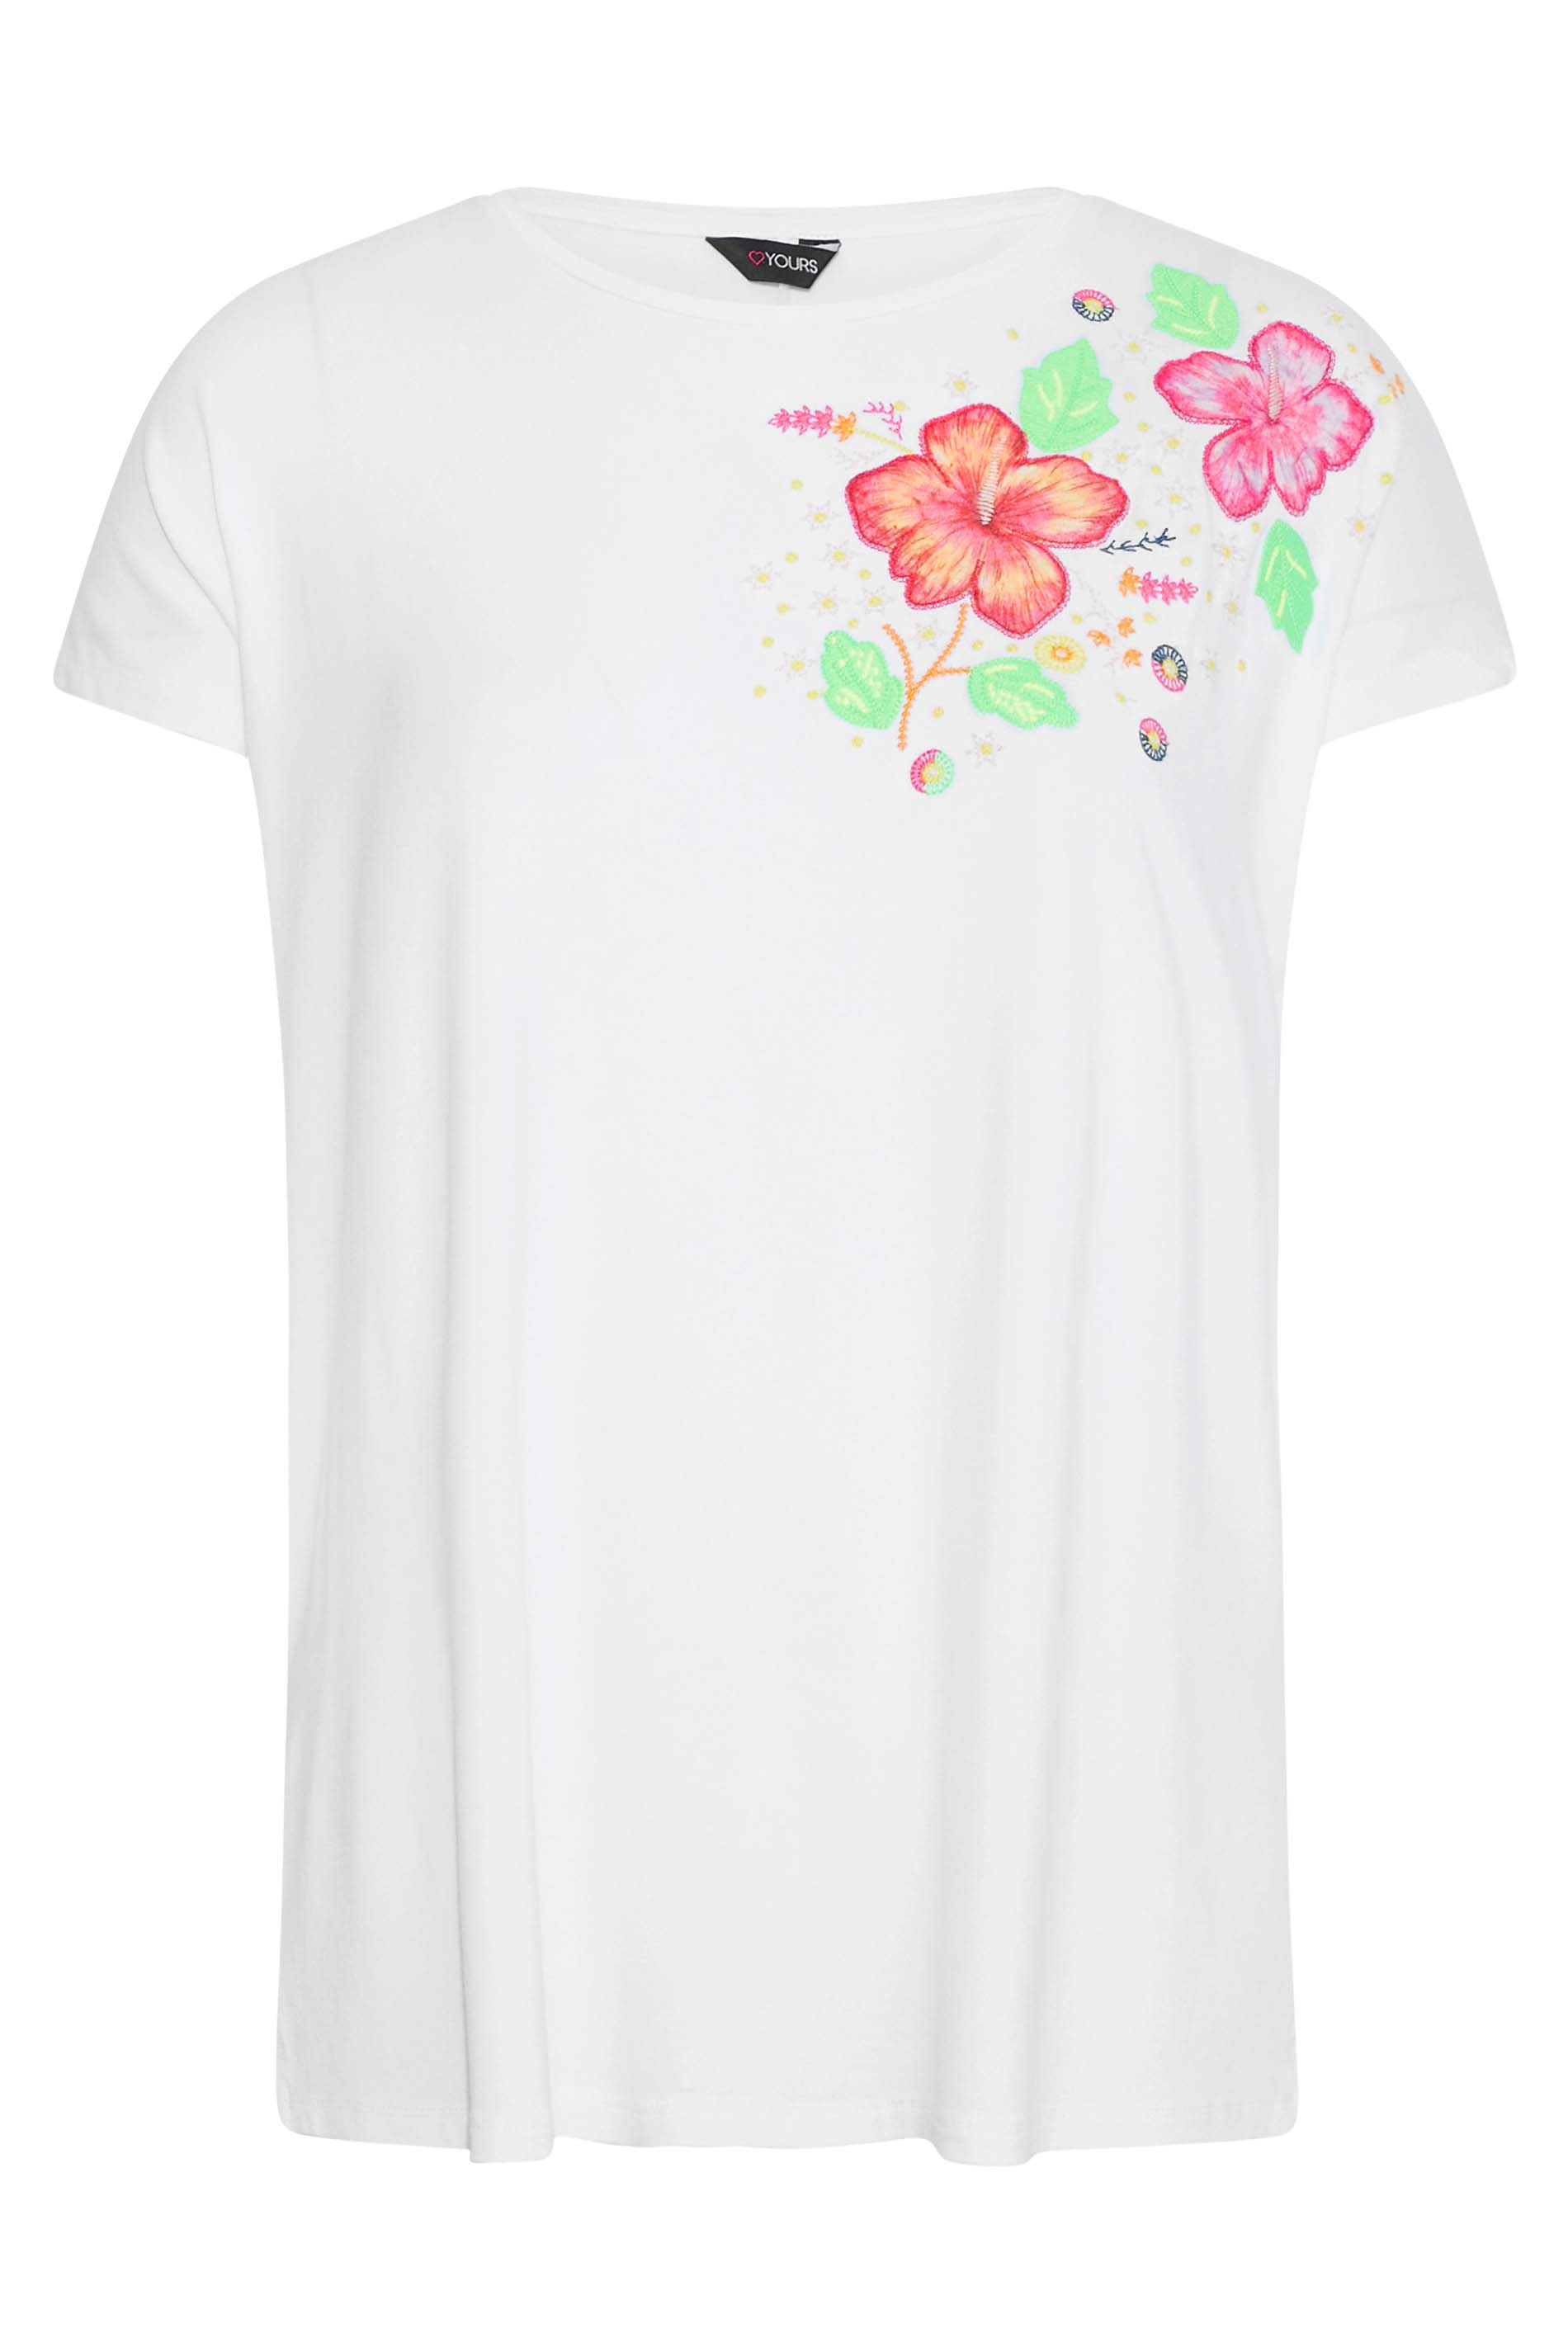 Grande taille  Tops Grande taille  T-Shirts | T-Shirt Blanc Manches Courtes en Floral - UQ07064